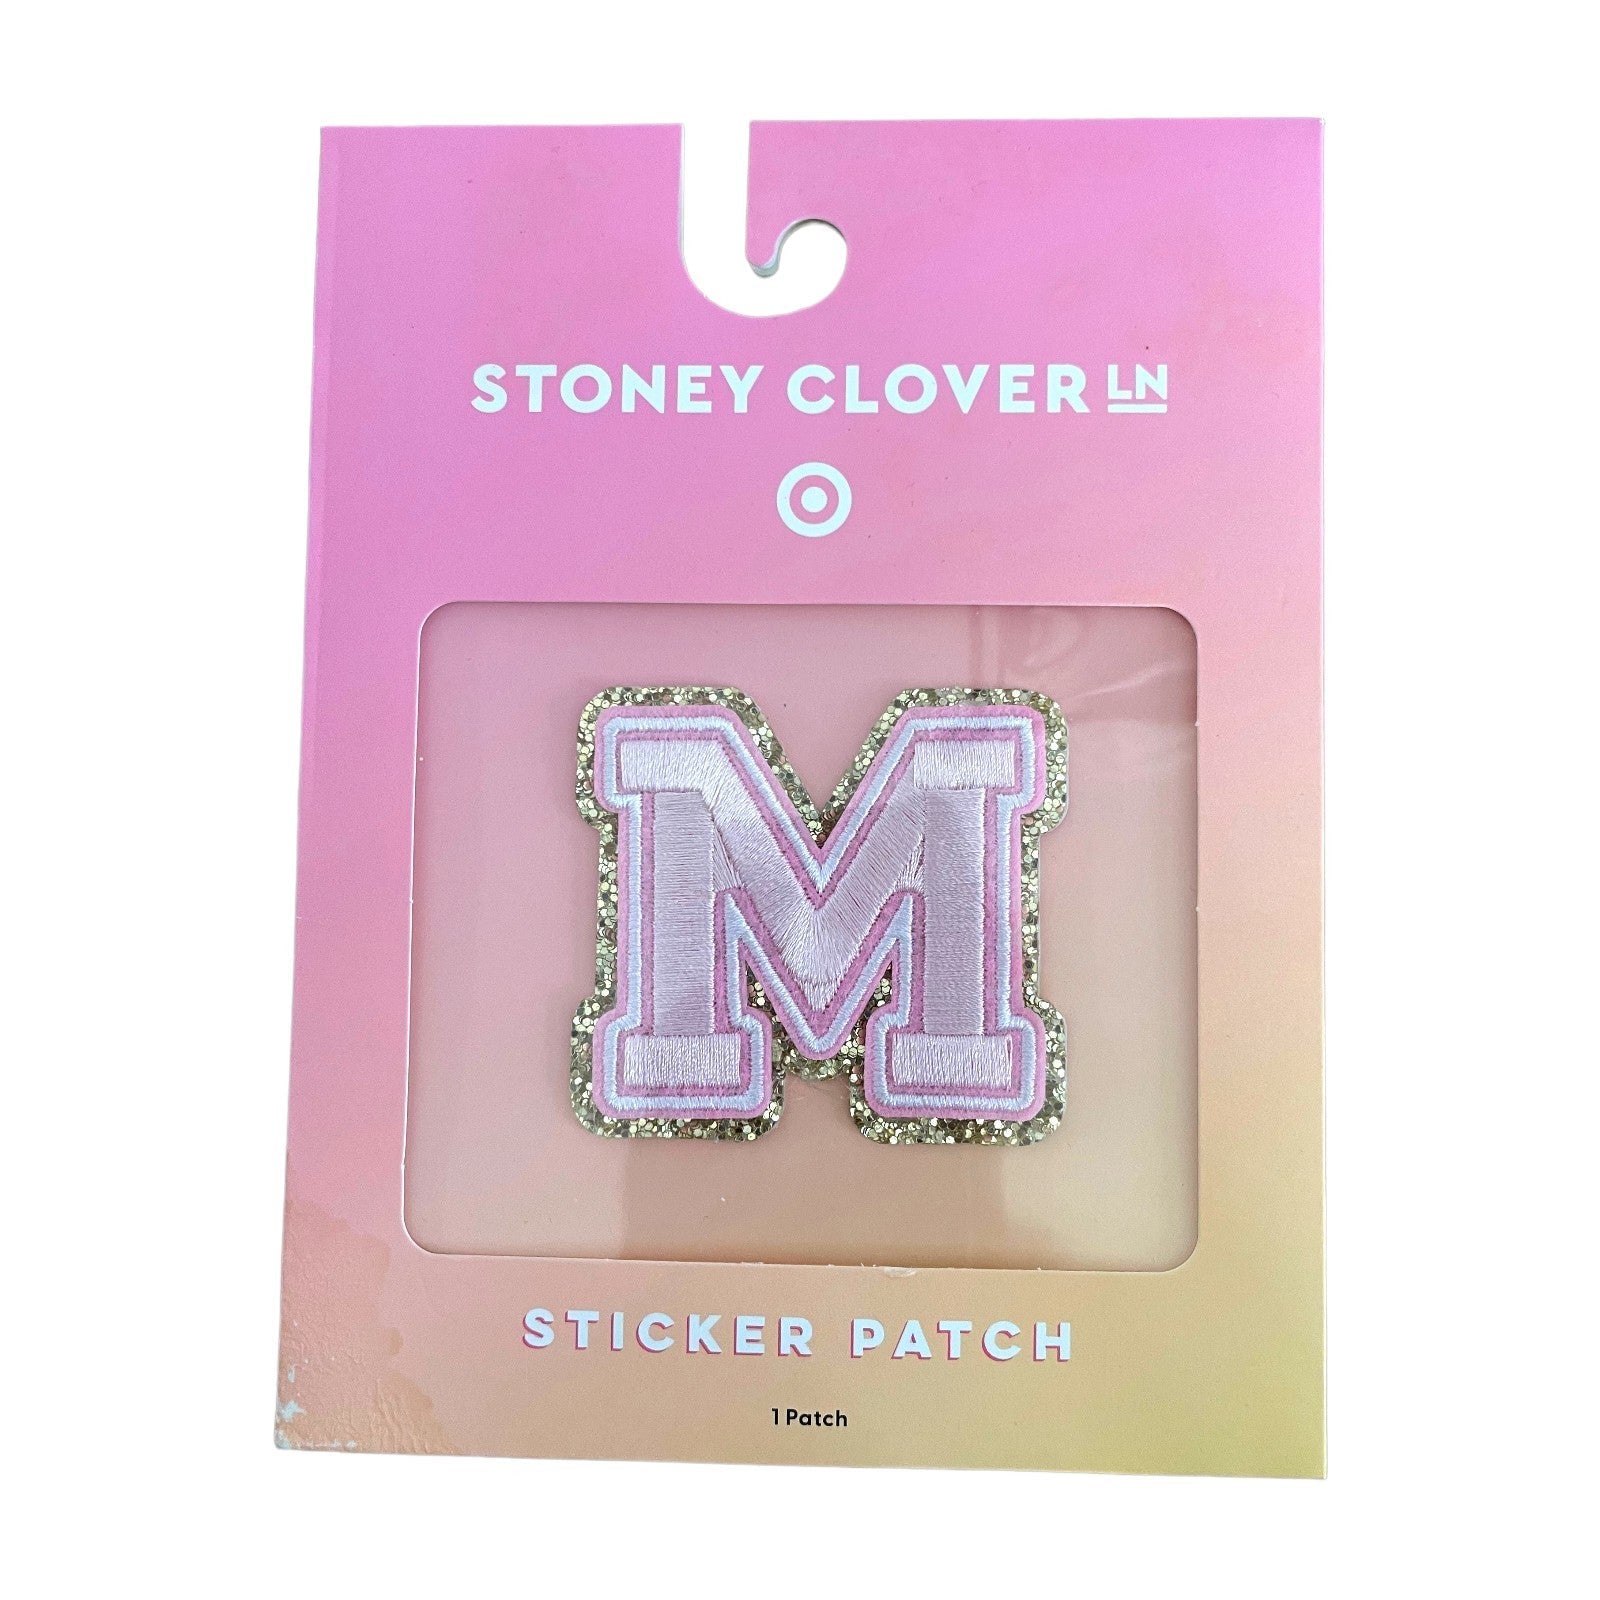 Stoney Clover Lane x Target